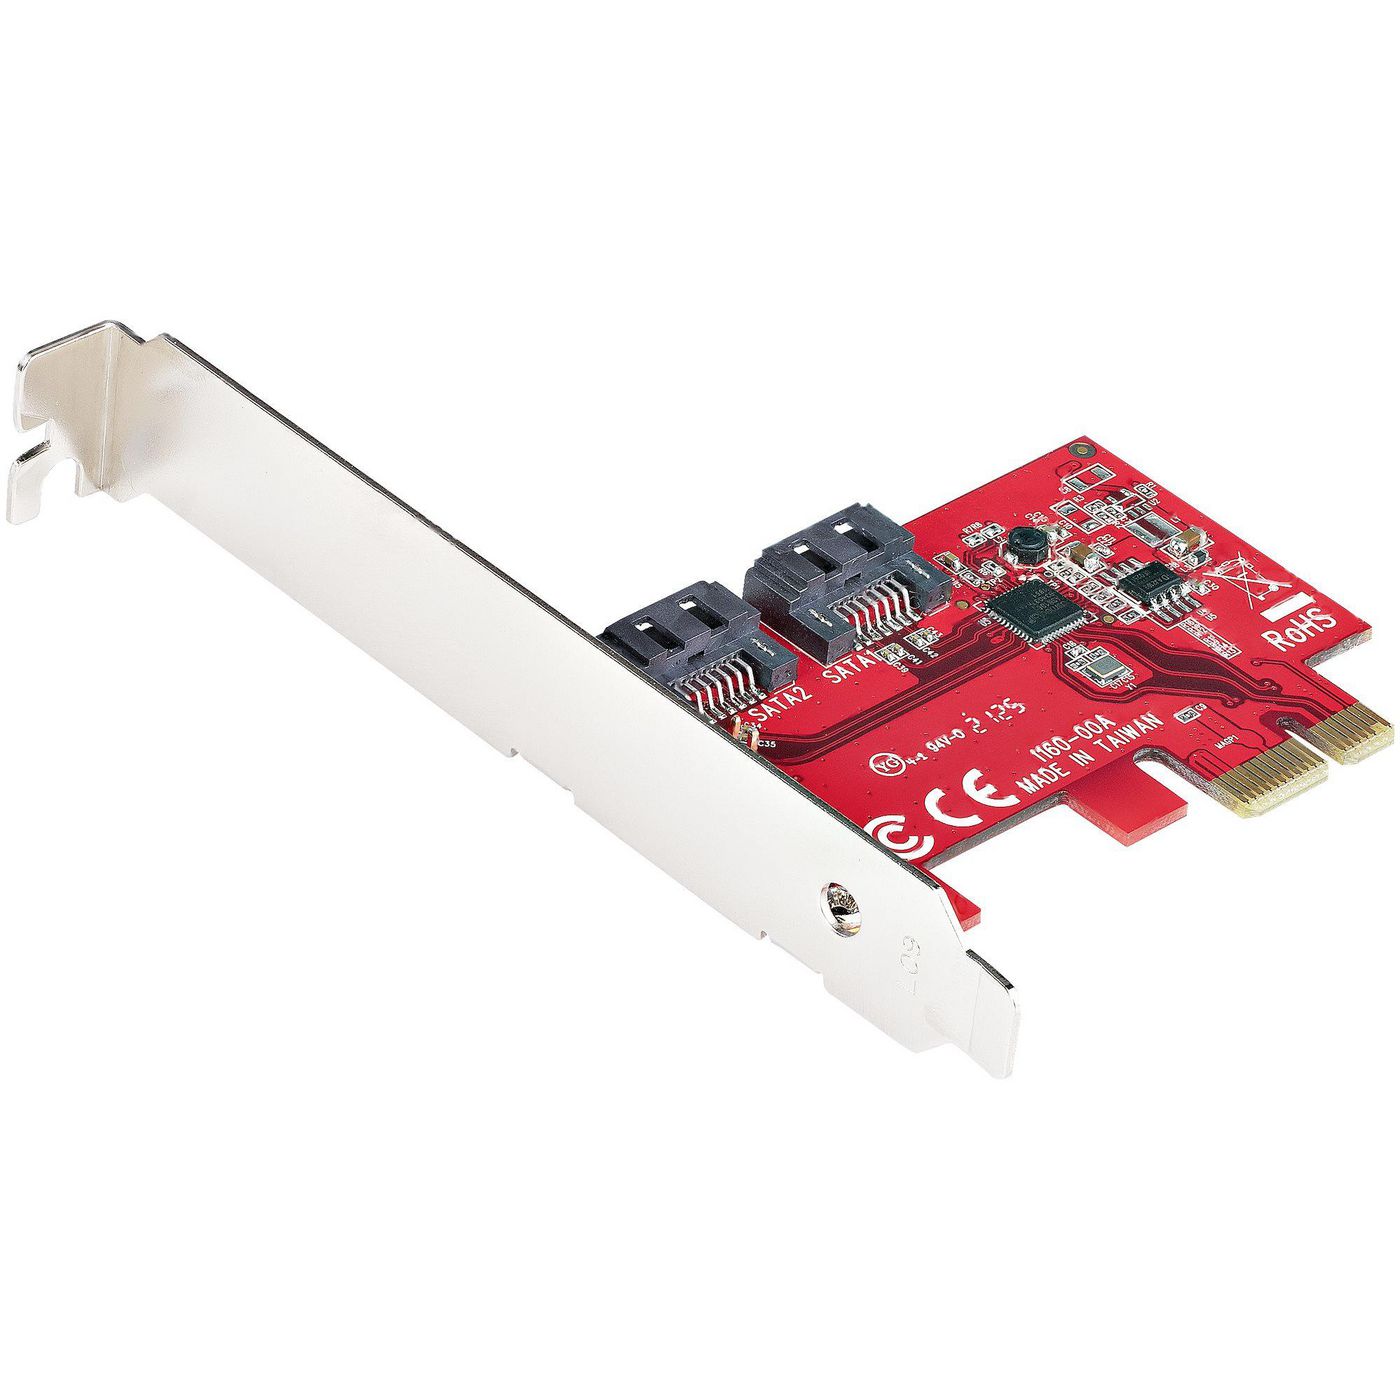 StarTechcom 2P6G-PCIE-SATA-CARD W128273067 Sata Pcie Card - 2 Port Pcie 